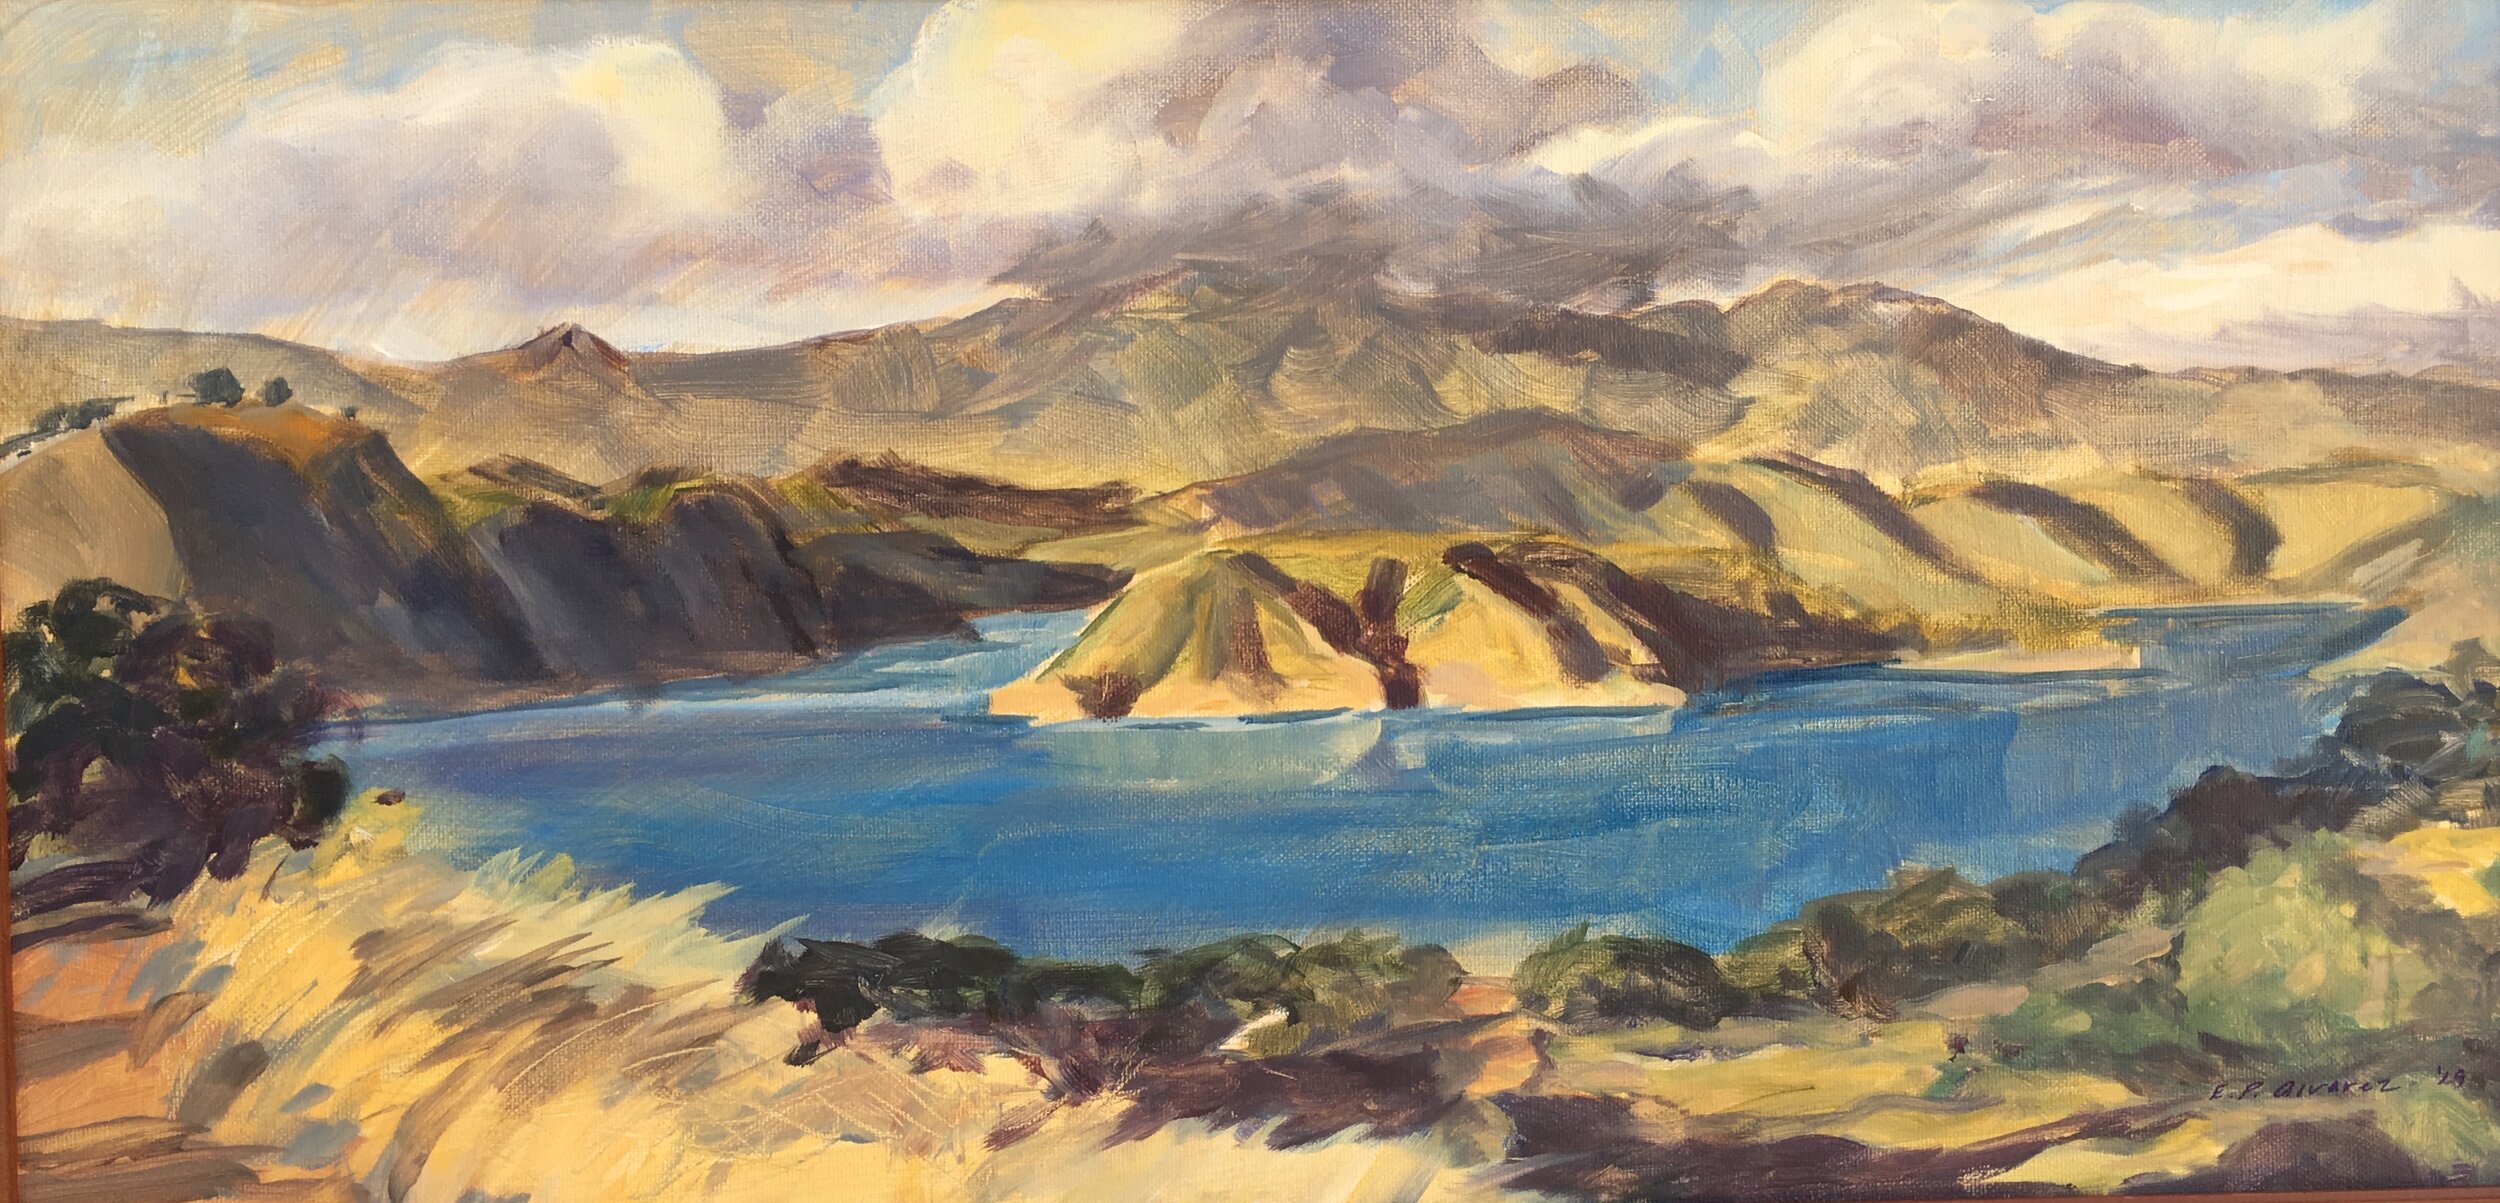 Liz Alvarez, "Lake Cachuma View," Acrylic on canvas